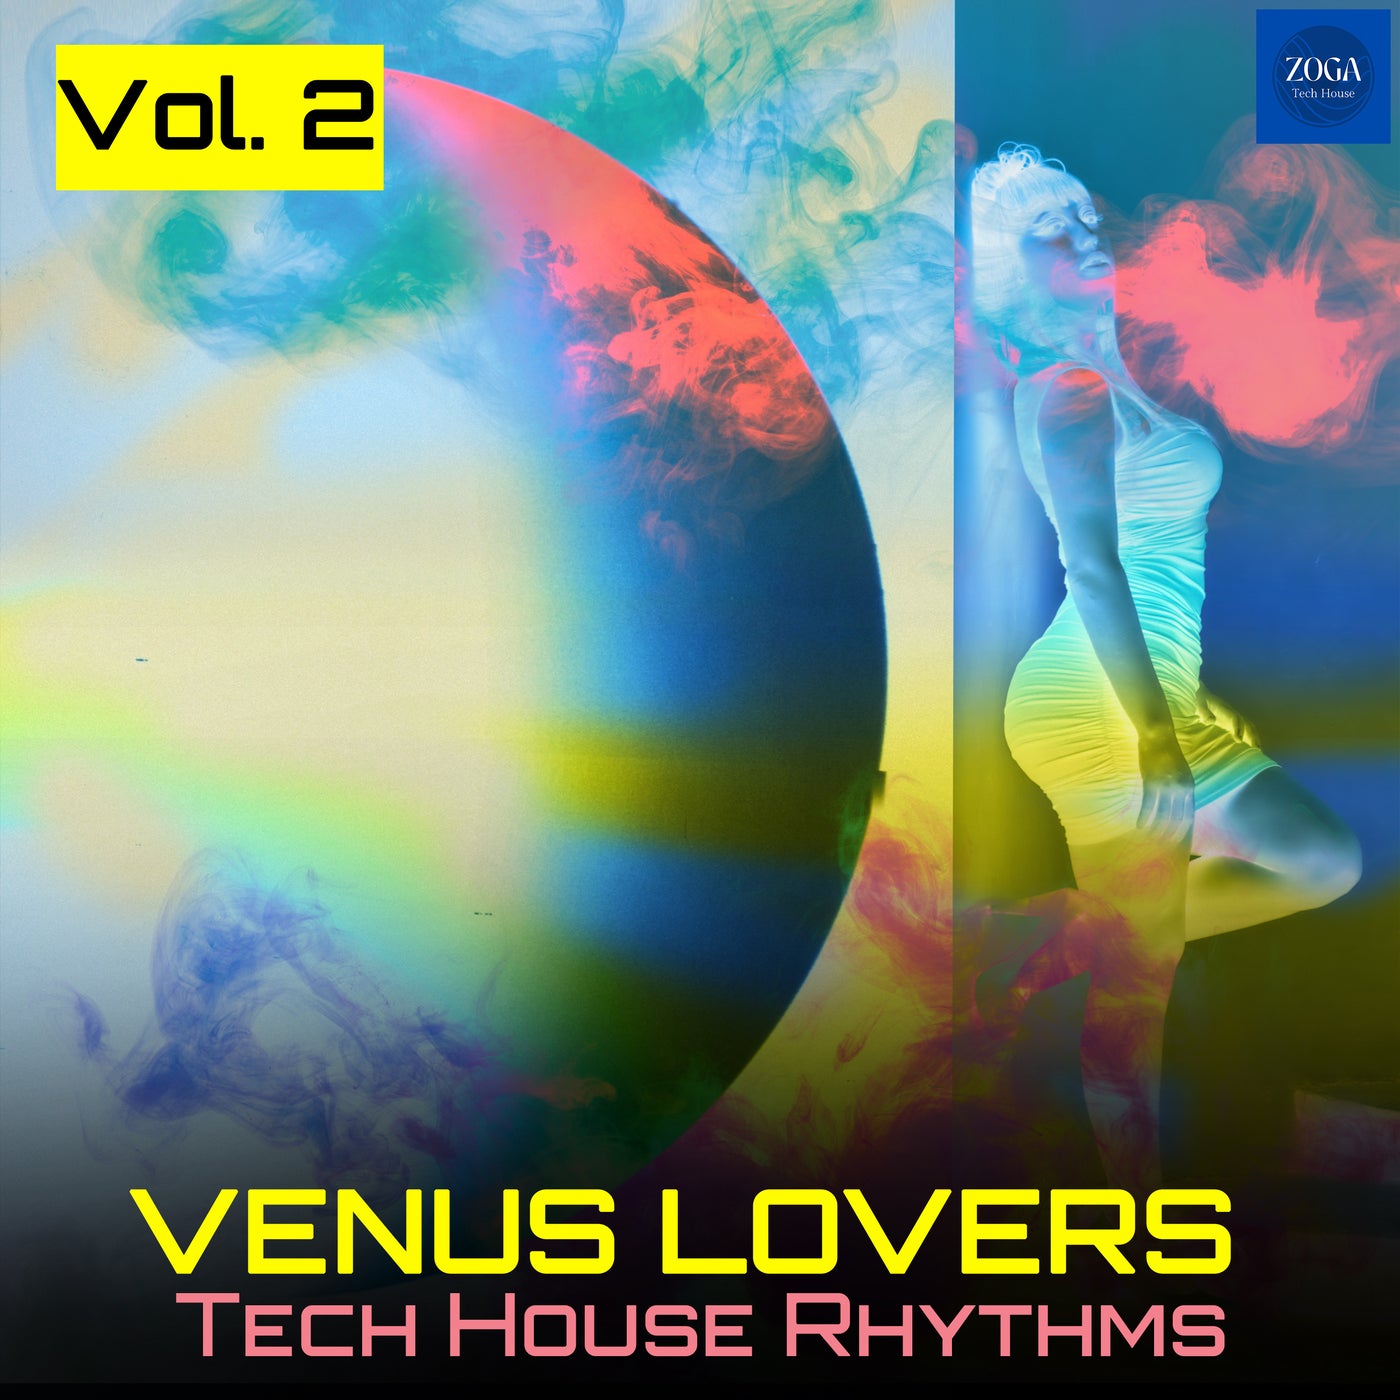 Venus Lovers, Vol. 2 (Tech House Rhythms)